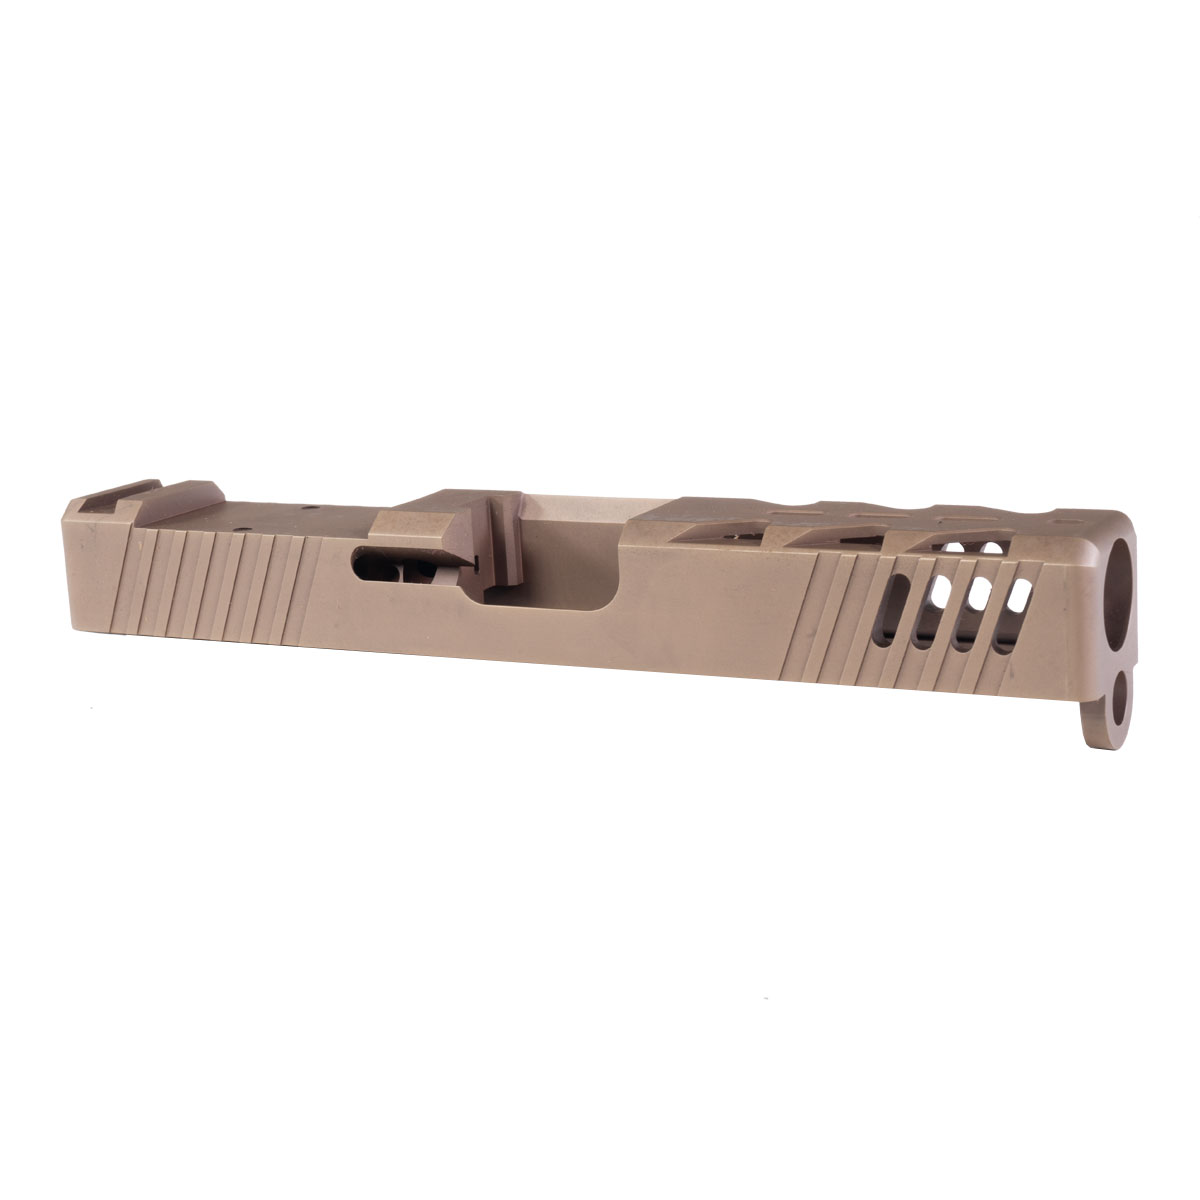 Matrix Arms Skeletonized (ALPHA) Glock 19 Gen 3 Compatible Pistol Slide - Coyote Brown